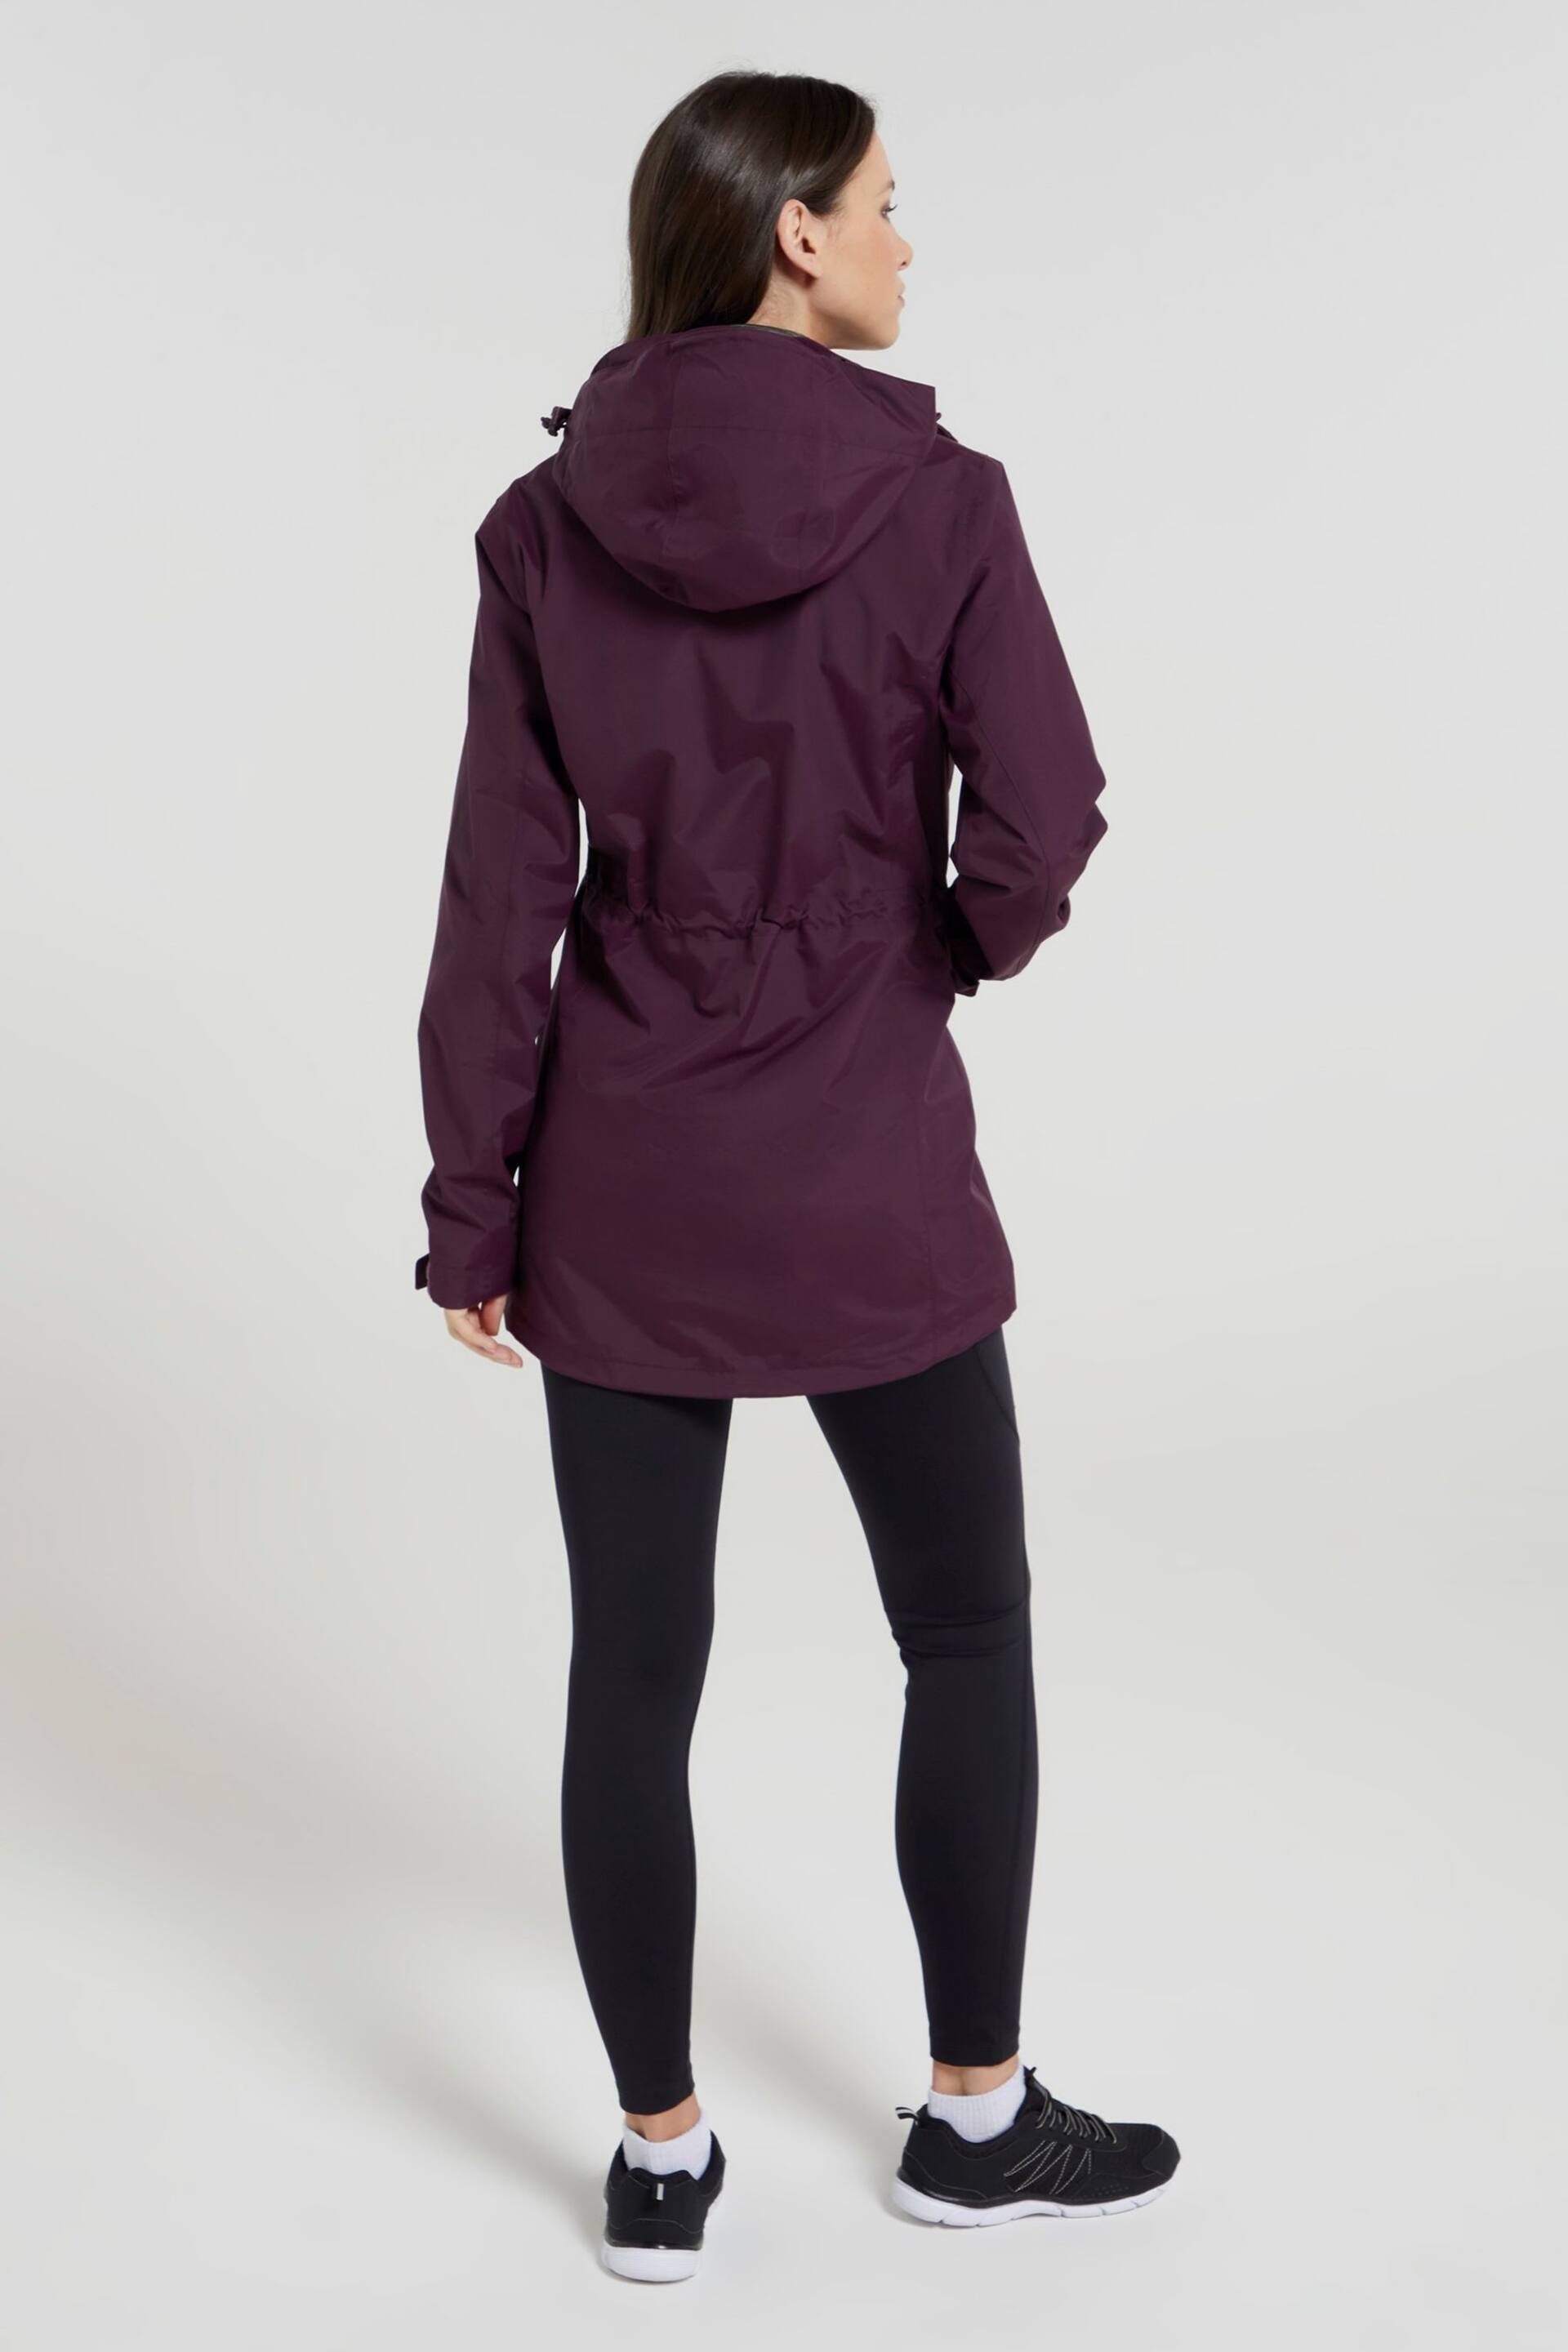 Mountain Warehouse Purple Womens Glacial Extreme Waterproof Jacket - Image 2 of 4